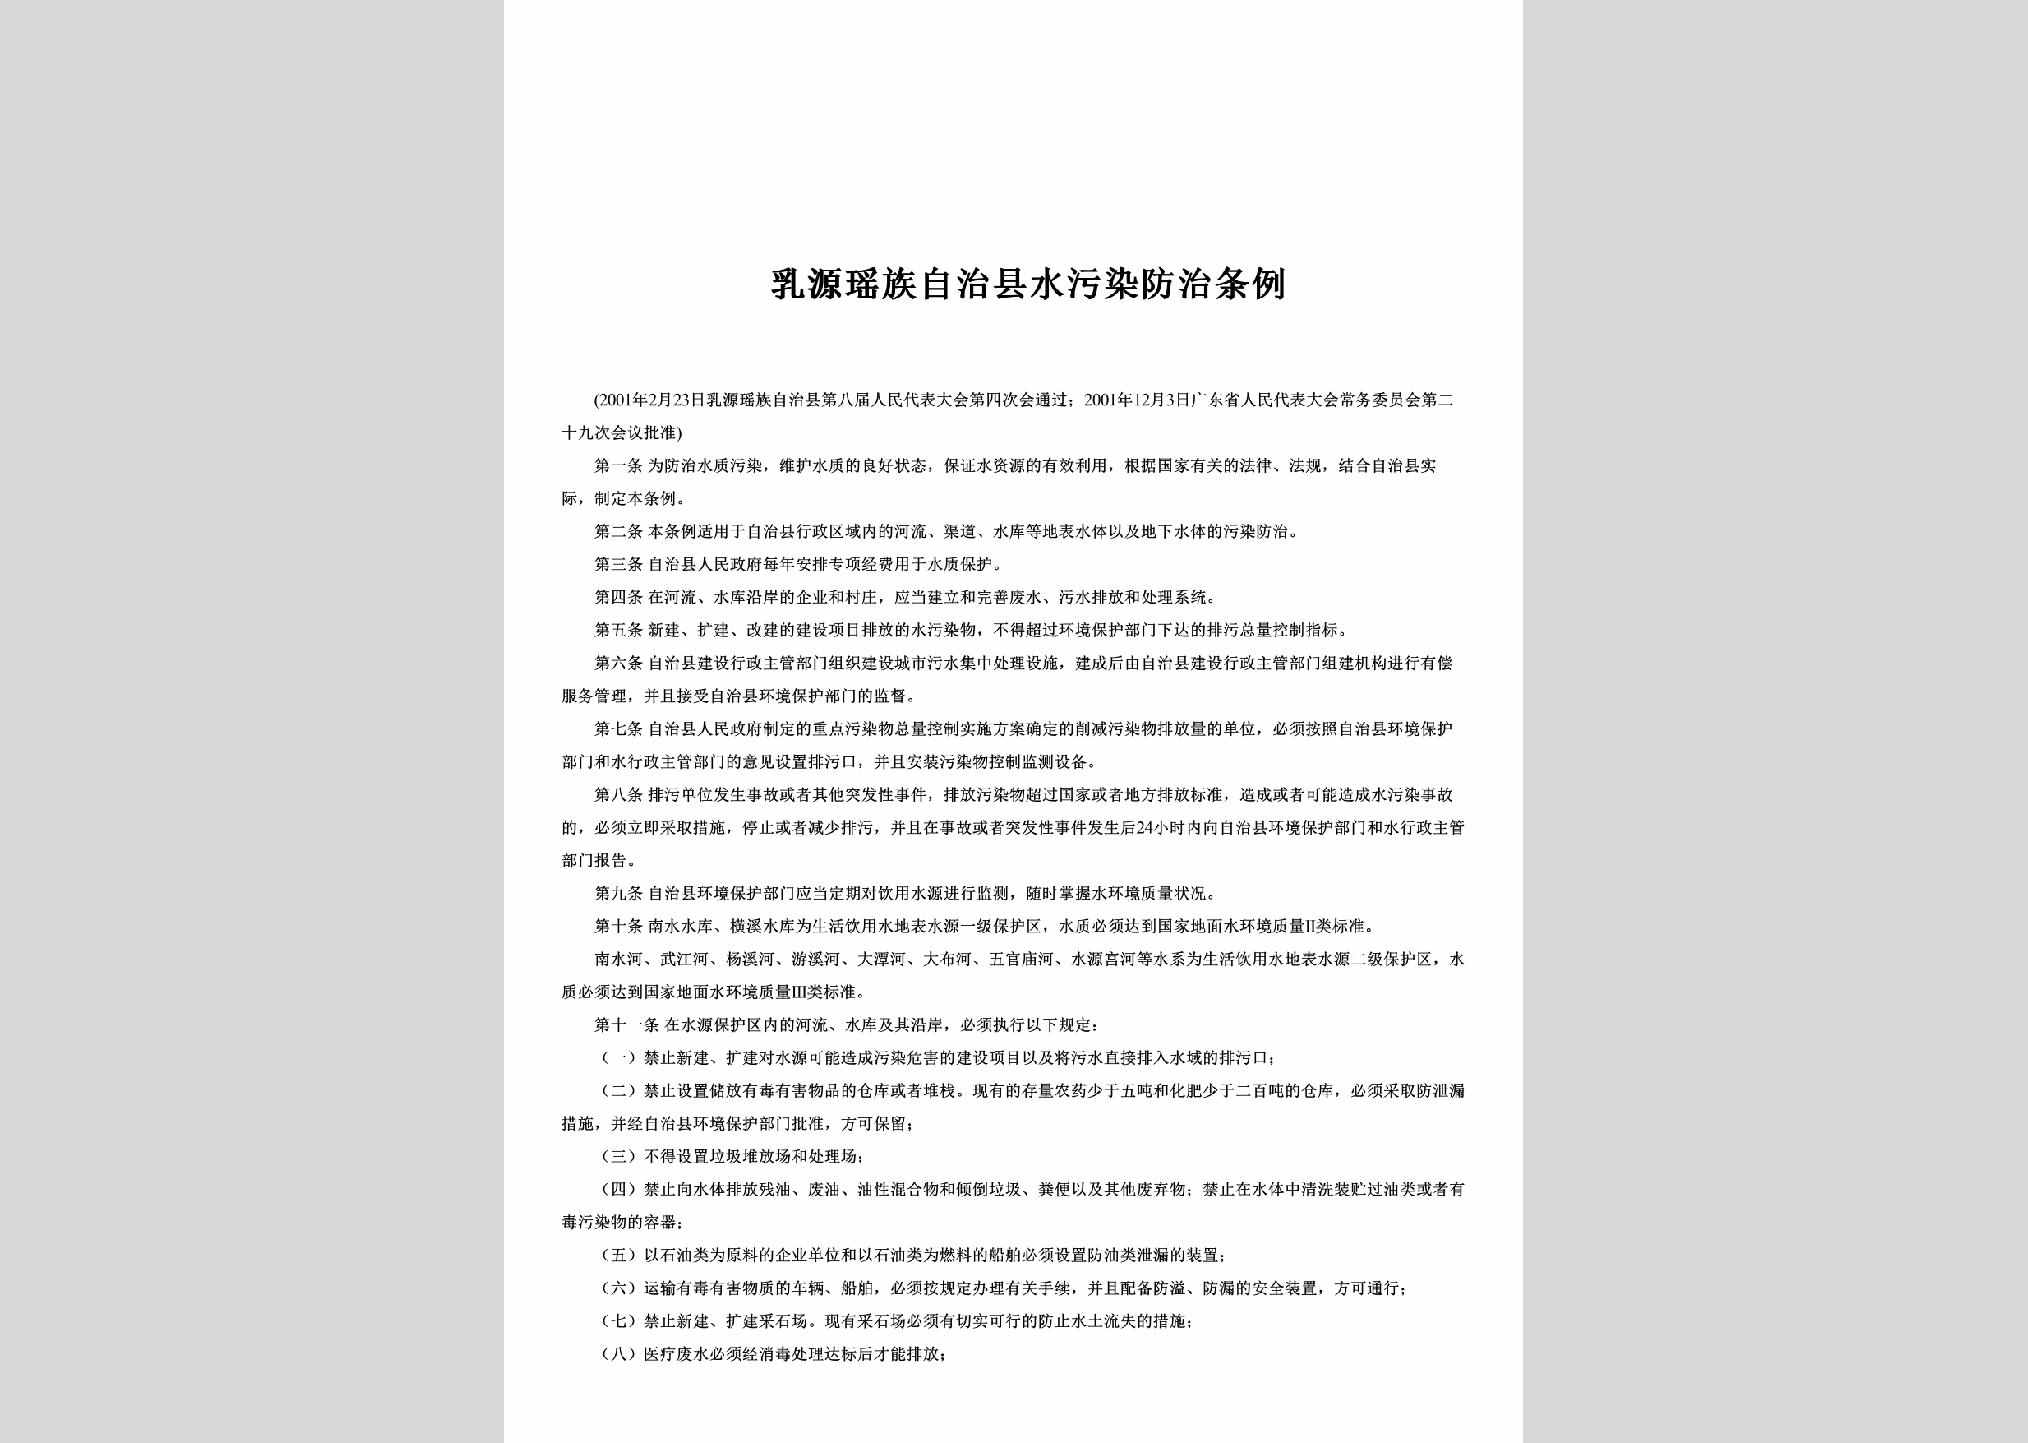 GD-SWRFZTL-2001：乳源瑶族自治县水污染防治条例